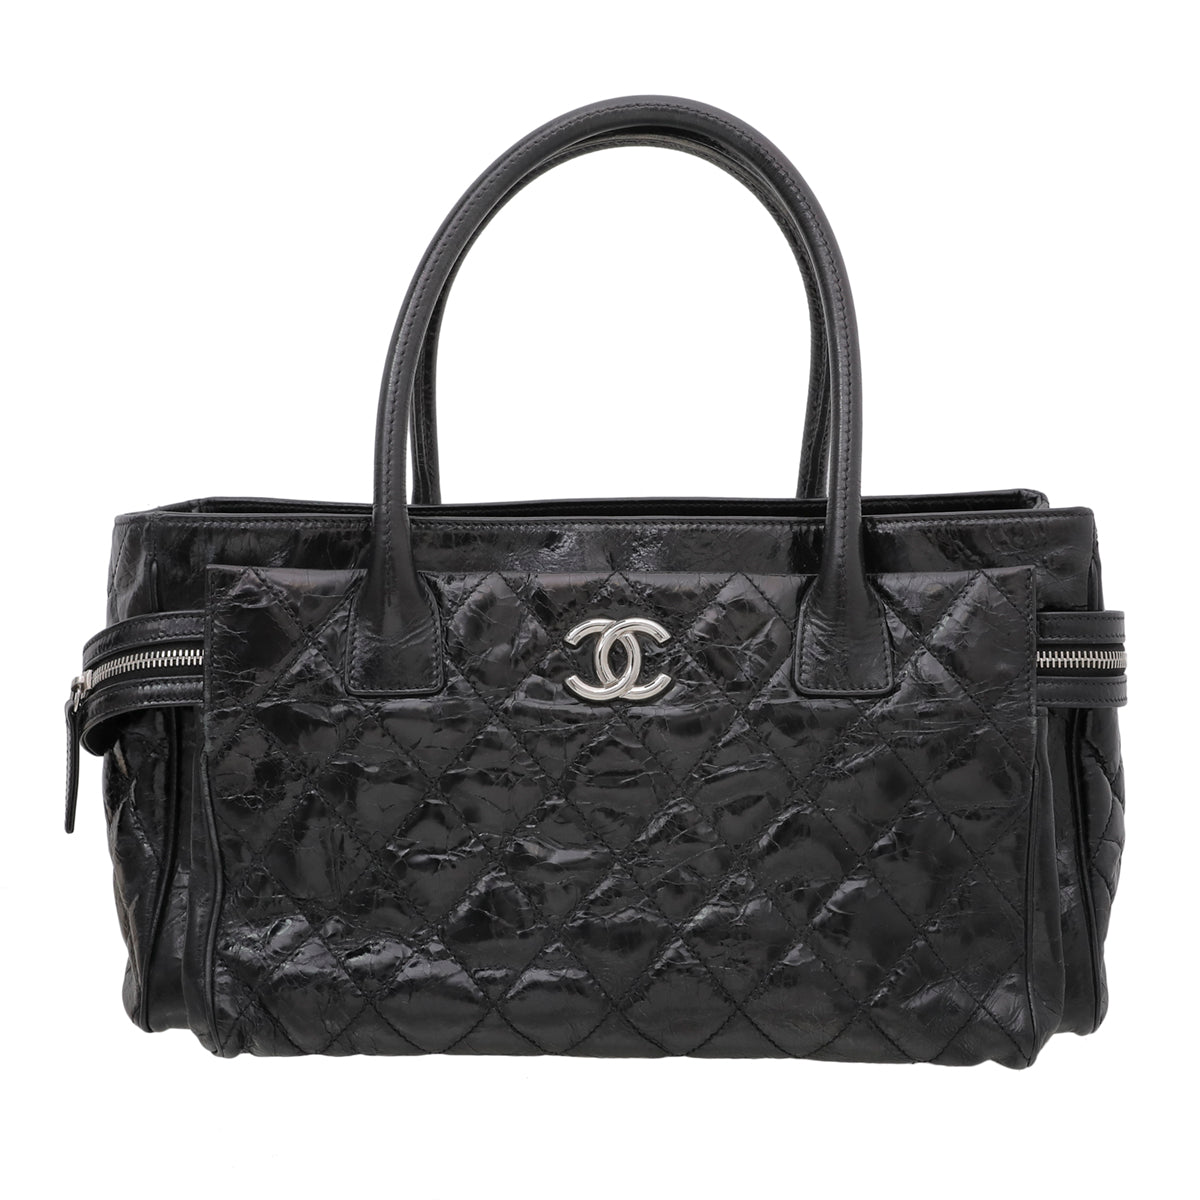 Chanel Black Glazed Portobello Tote Bag